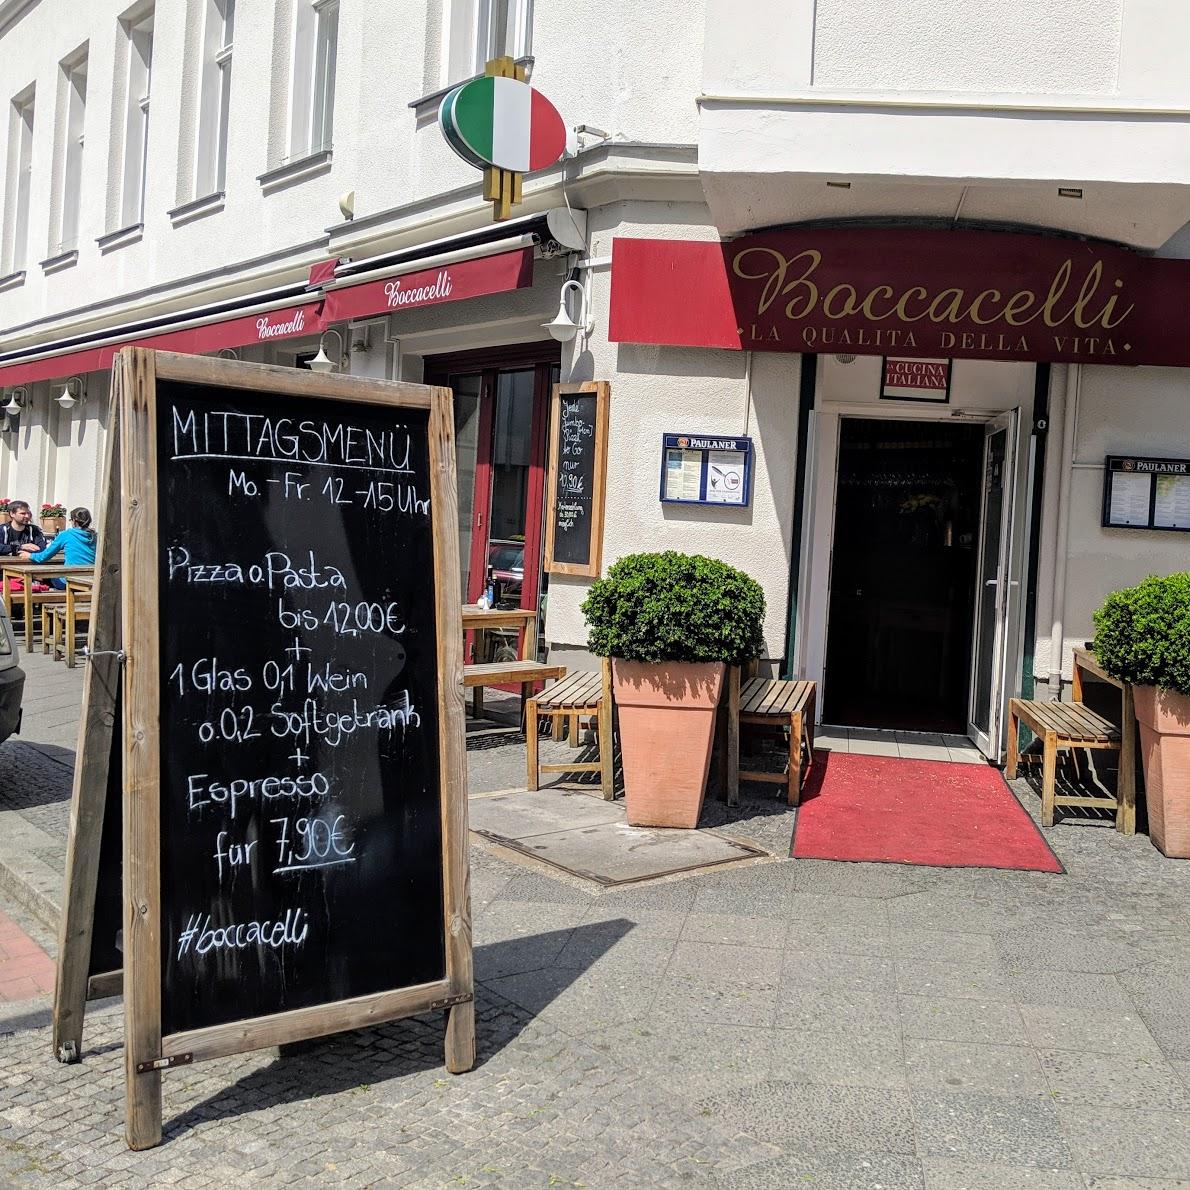 Restaurant "Boccacelli am Winterfeldtplatz" in  Berlin